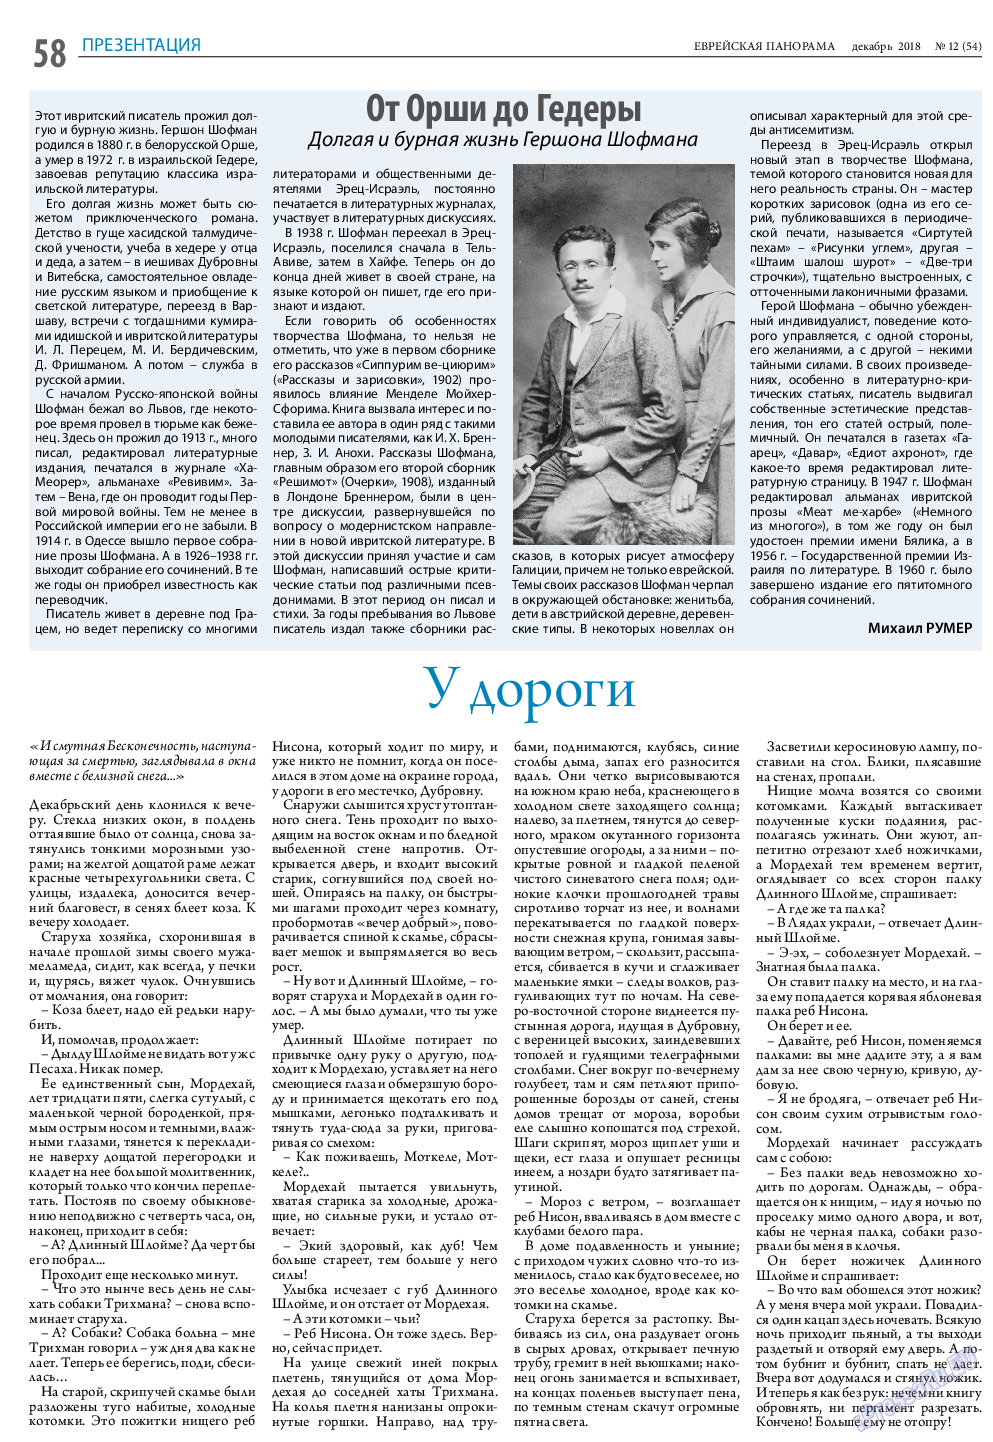 Еврейская панорама, газета. 2018 №12 стр.58